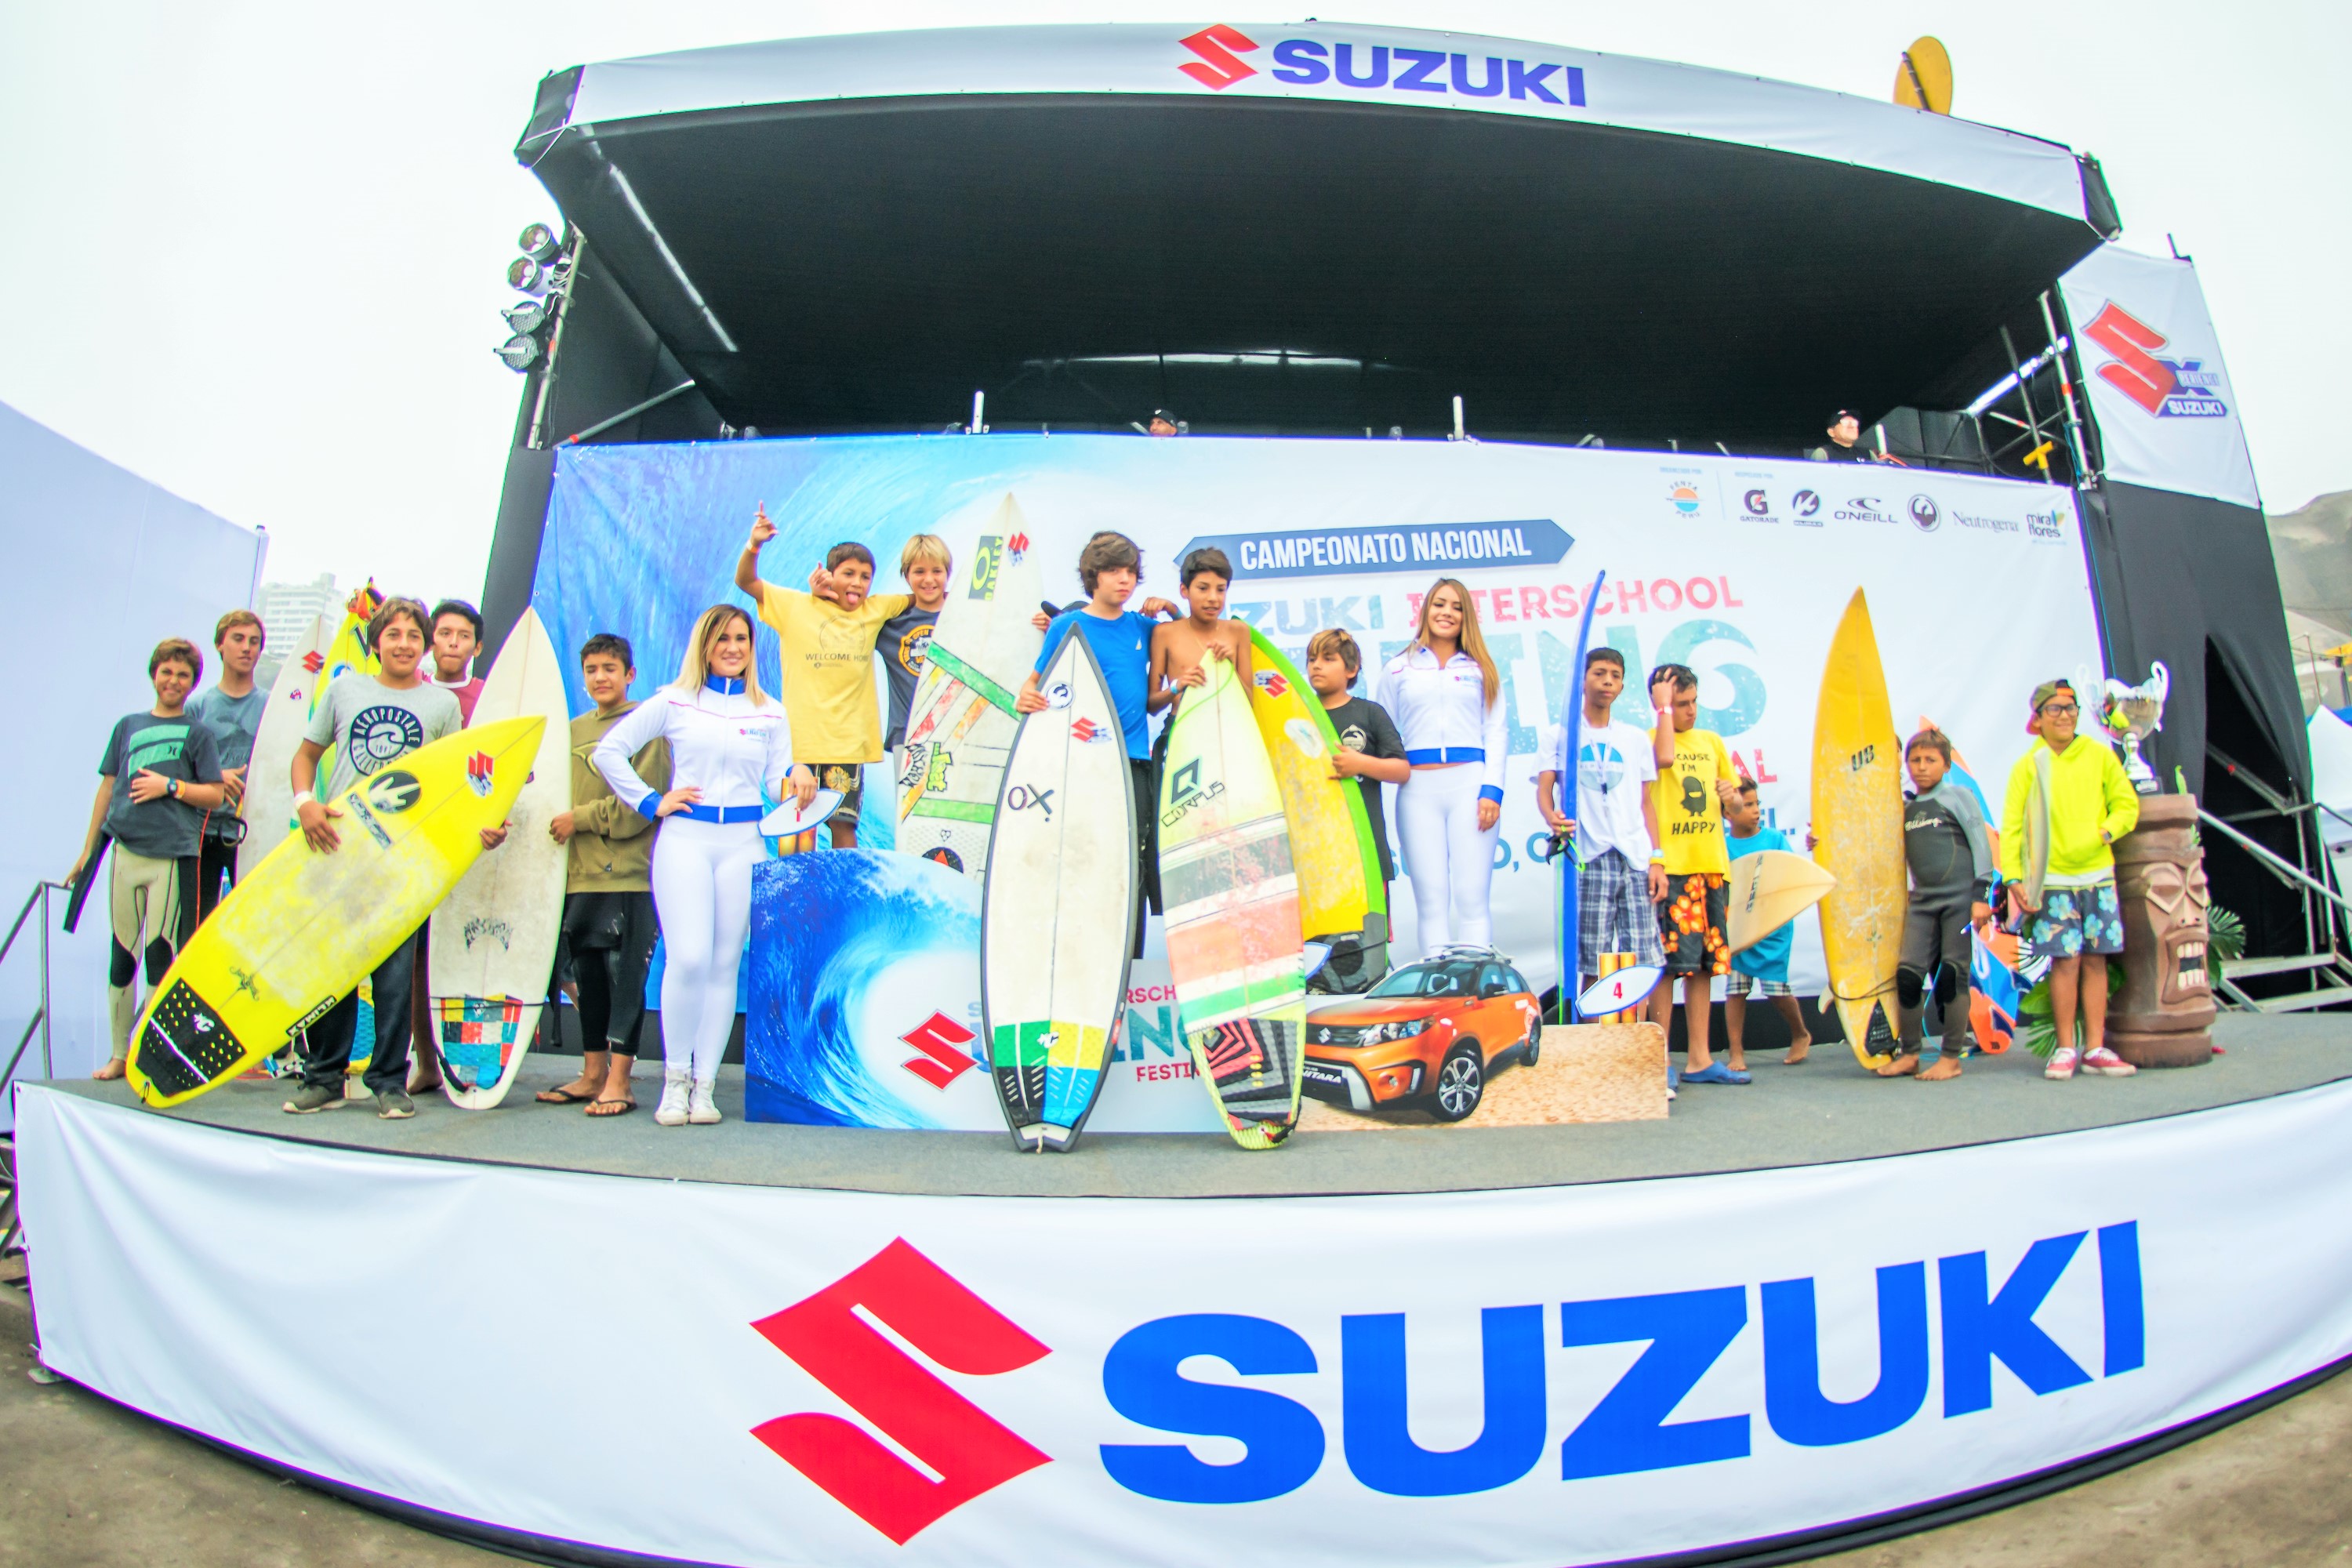 Suzuki-Campeonato Interescolar de Surf (3)